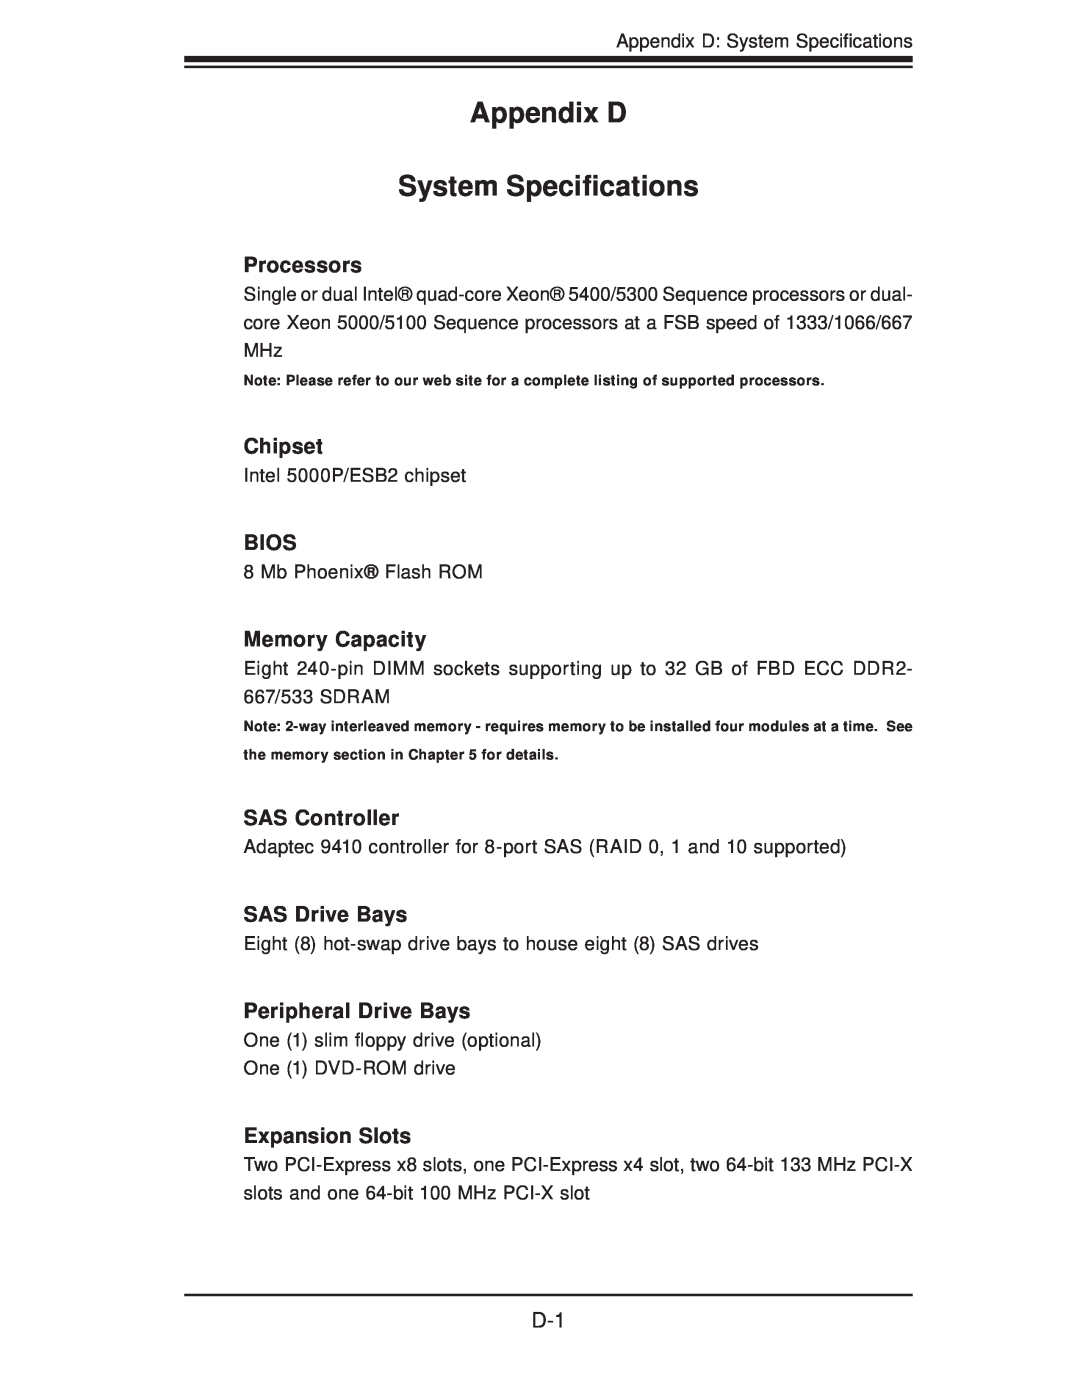 SUPER MICRO Computer 6025B-3R Appendix D System Speciﬁcations, Chipset, Bios, Memory Capacity, SAS Controller, Processors 